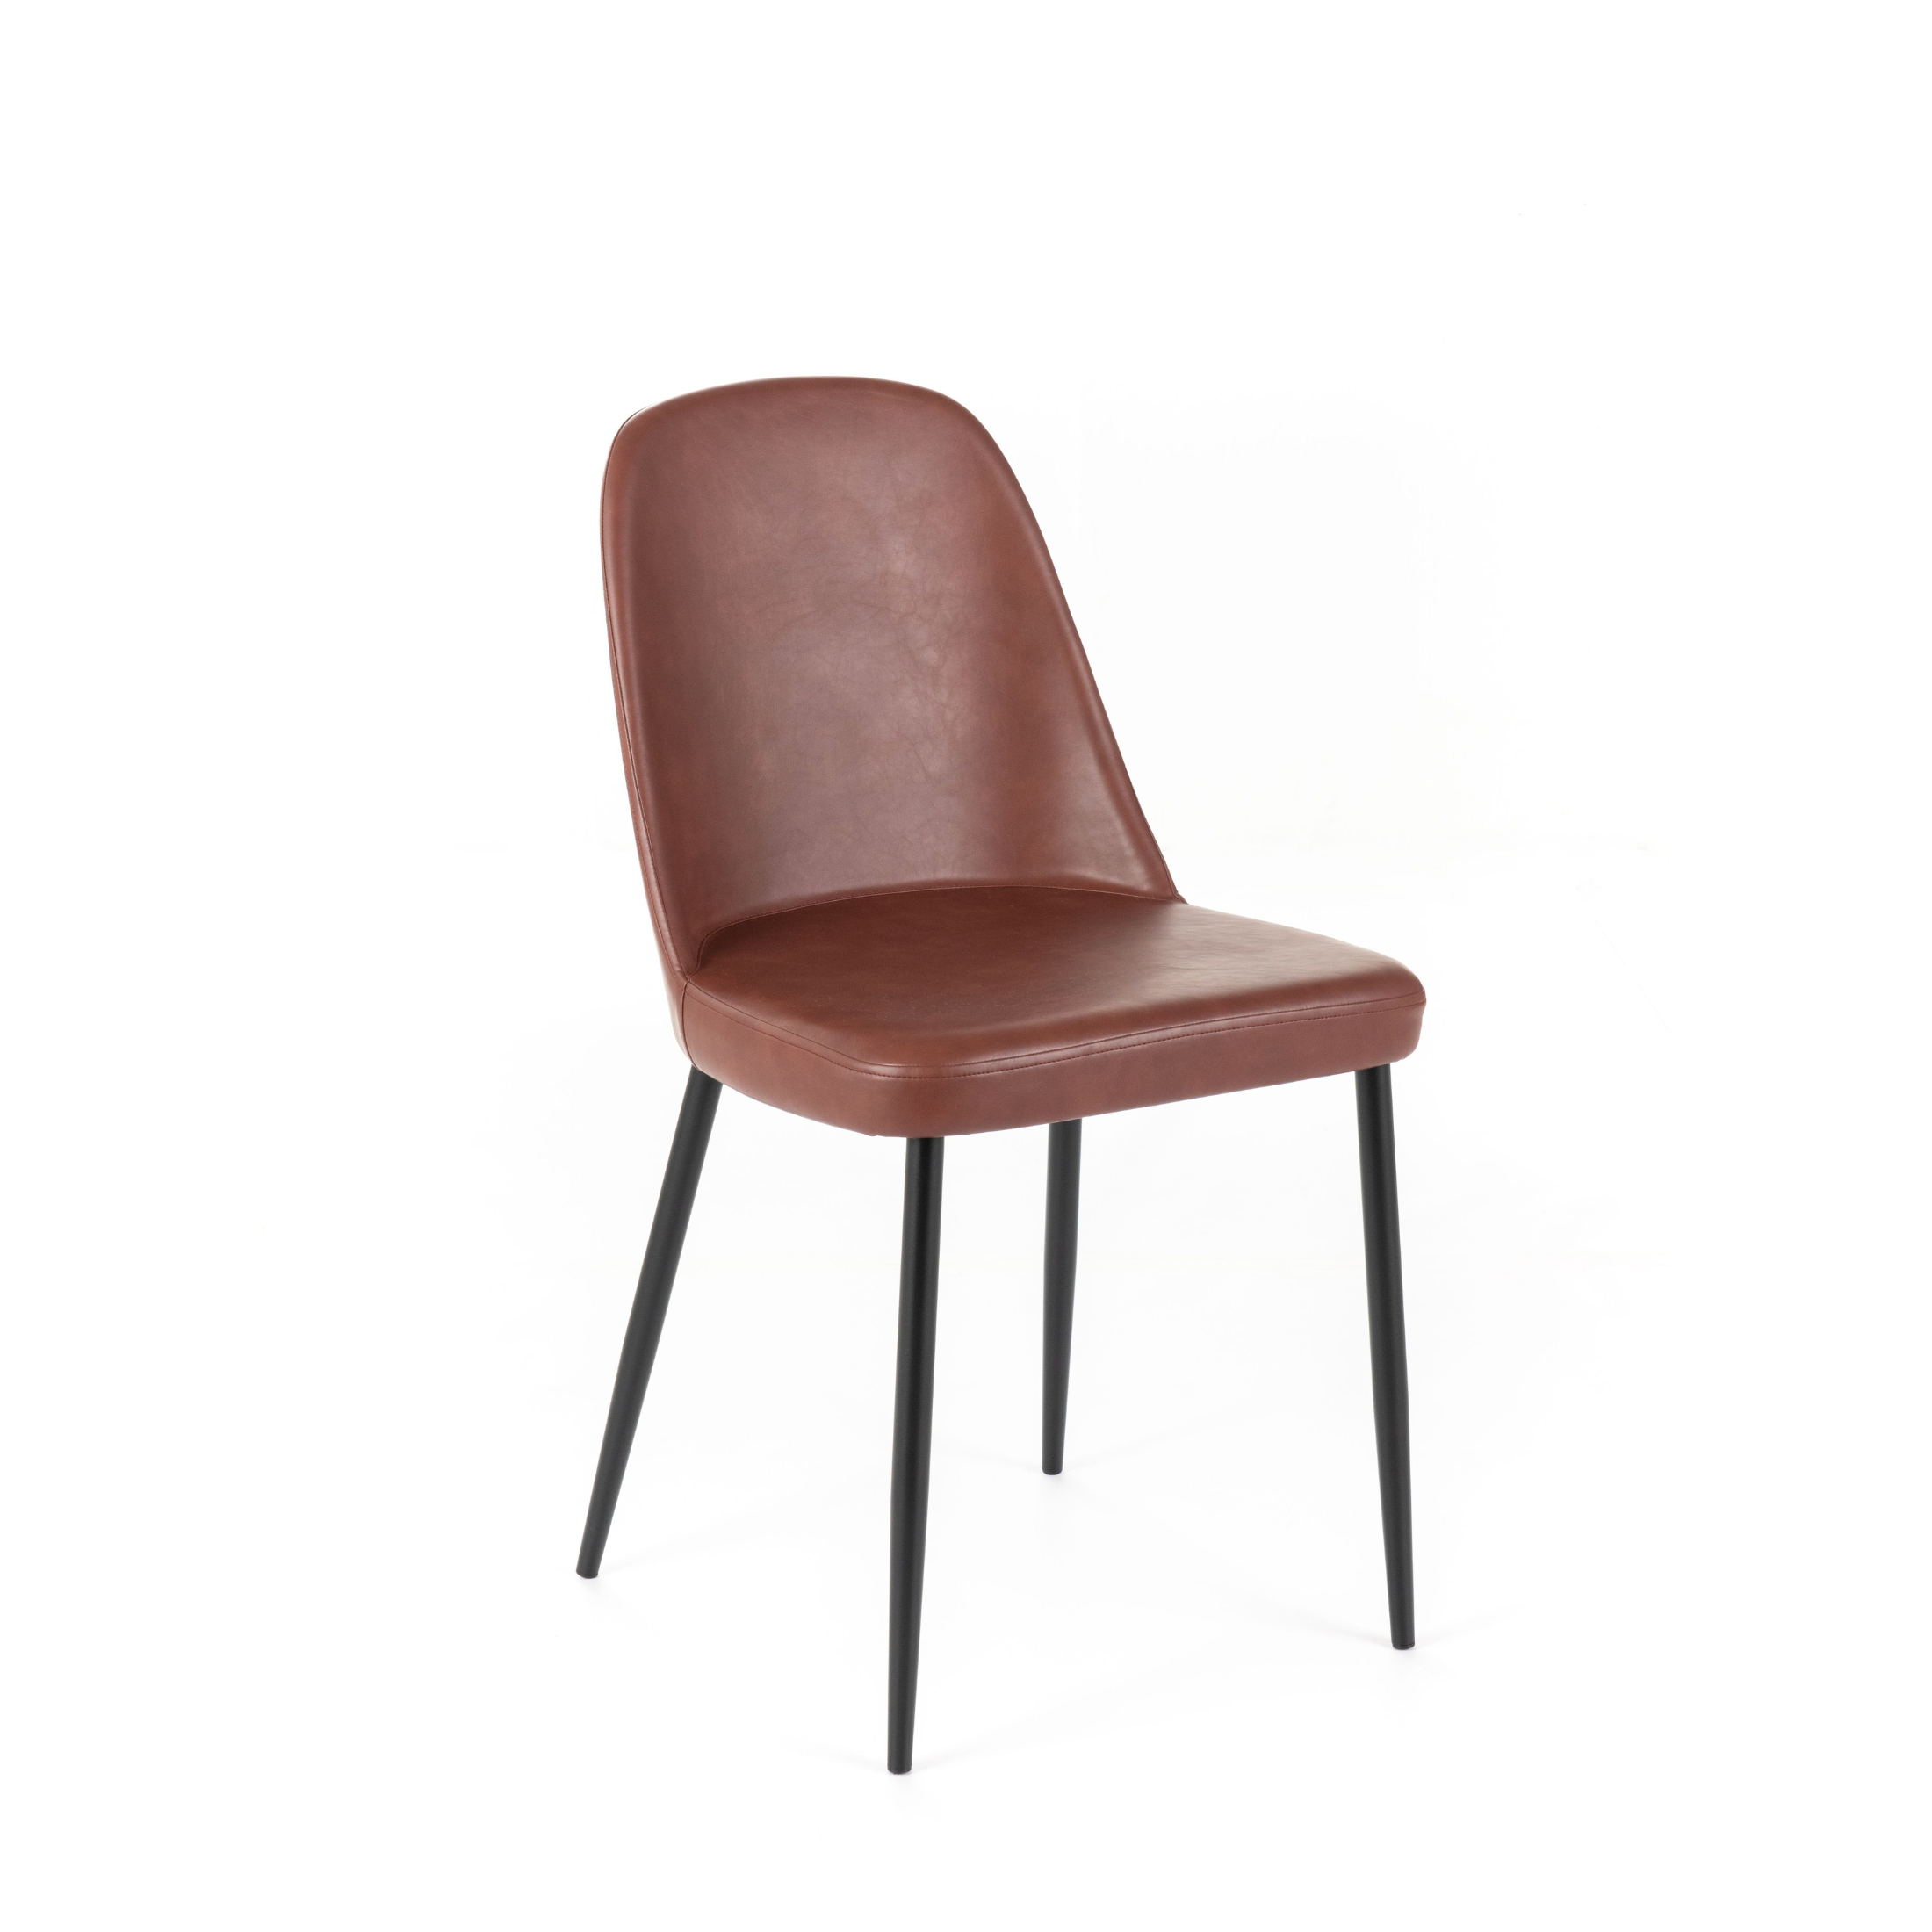 Set sedie moderne da pranzo "Tamara" imbottite in similpelle soft touch